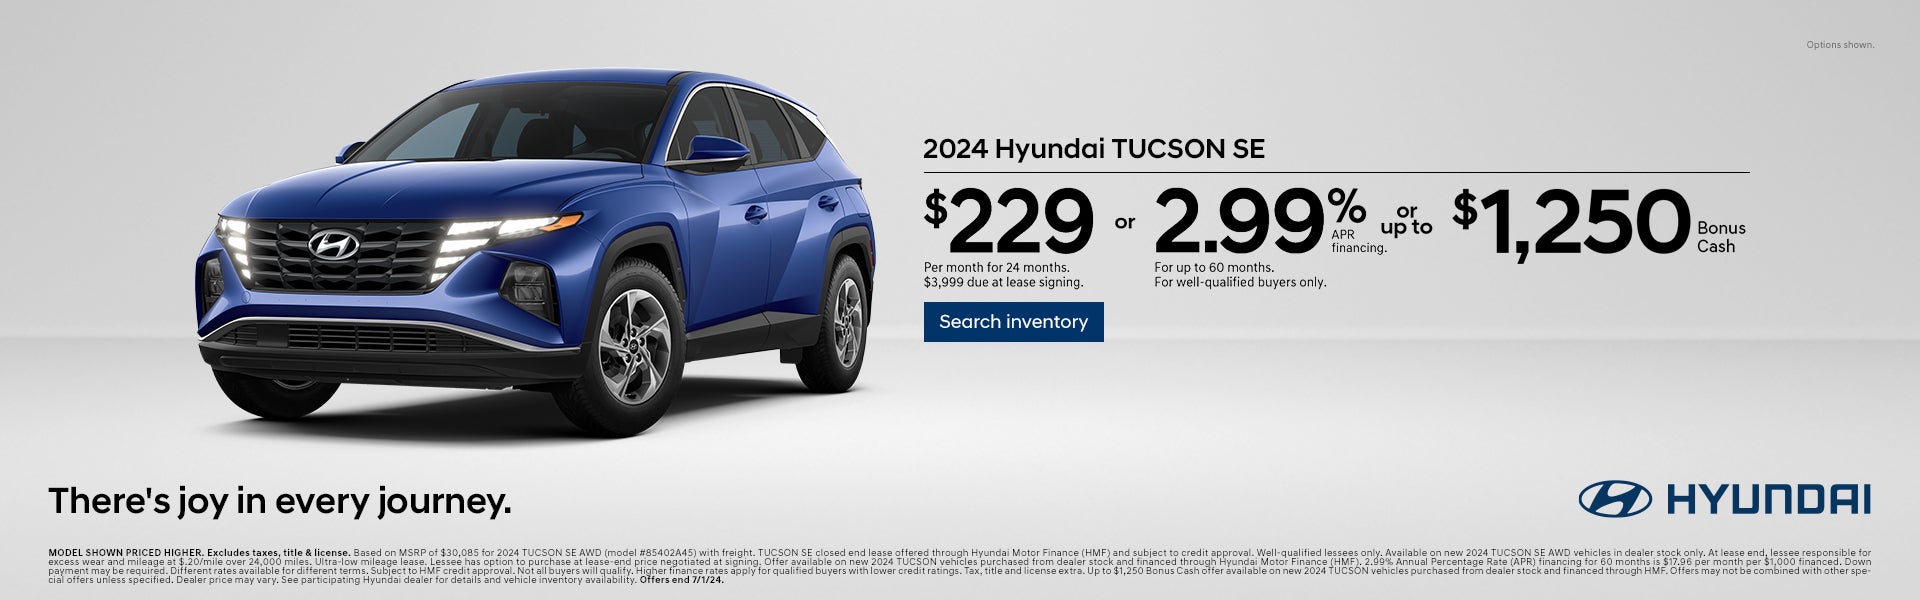 2024 Hyundai Tucson SE offer 